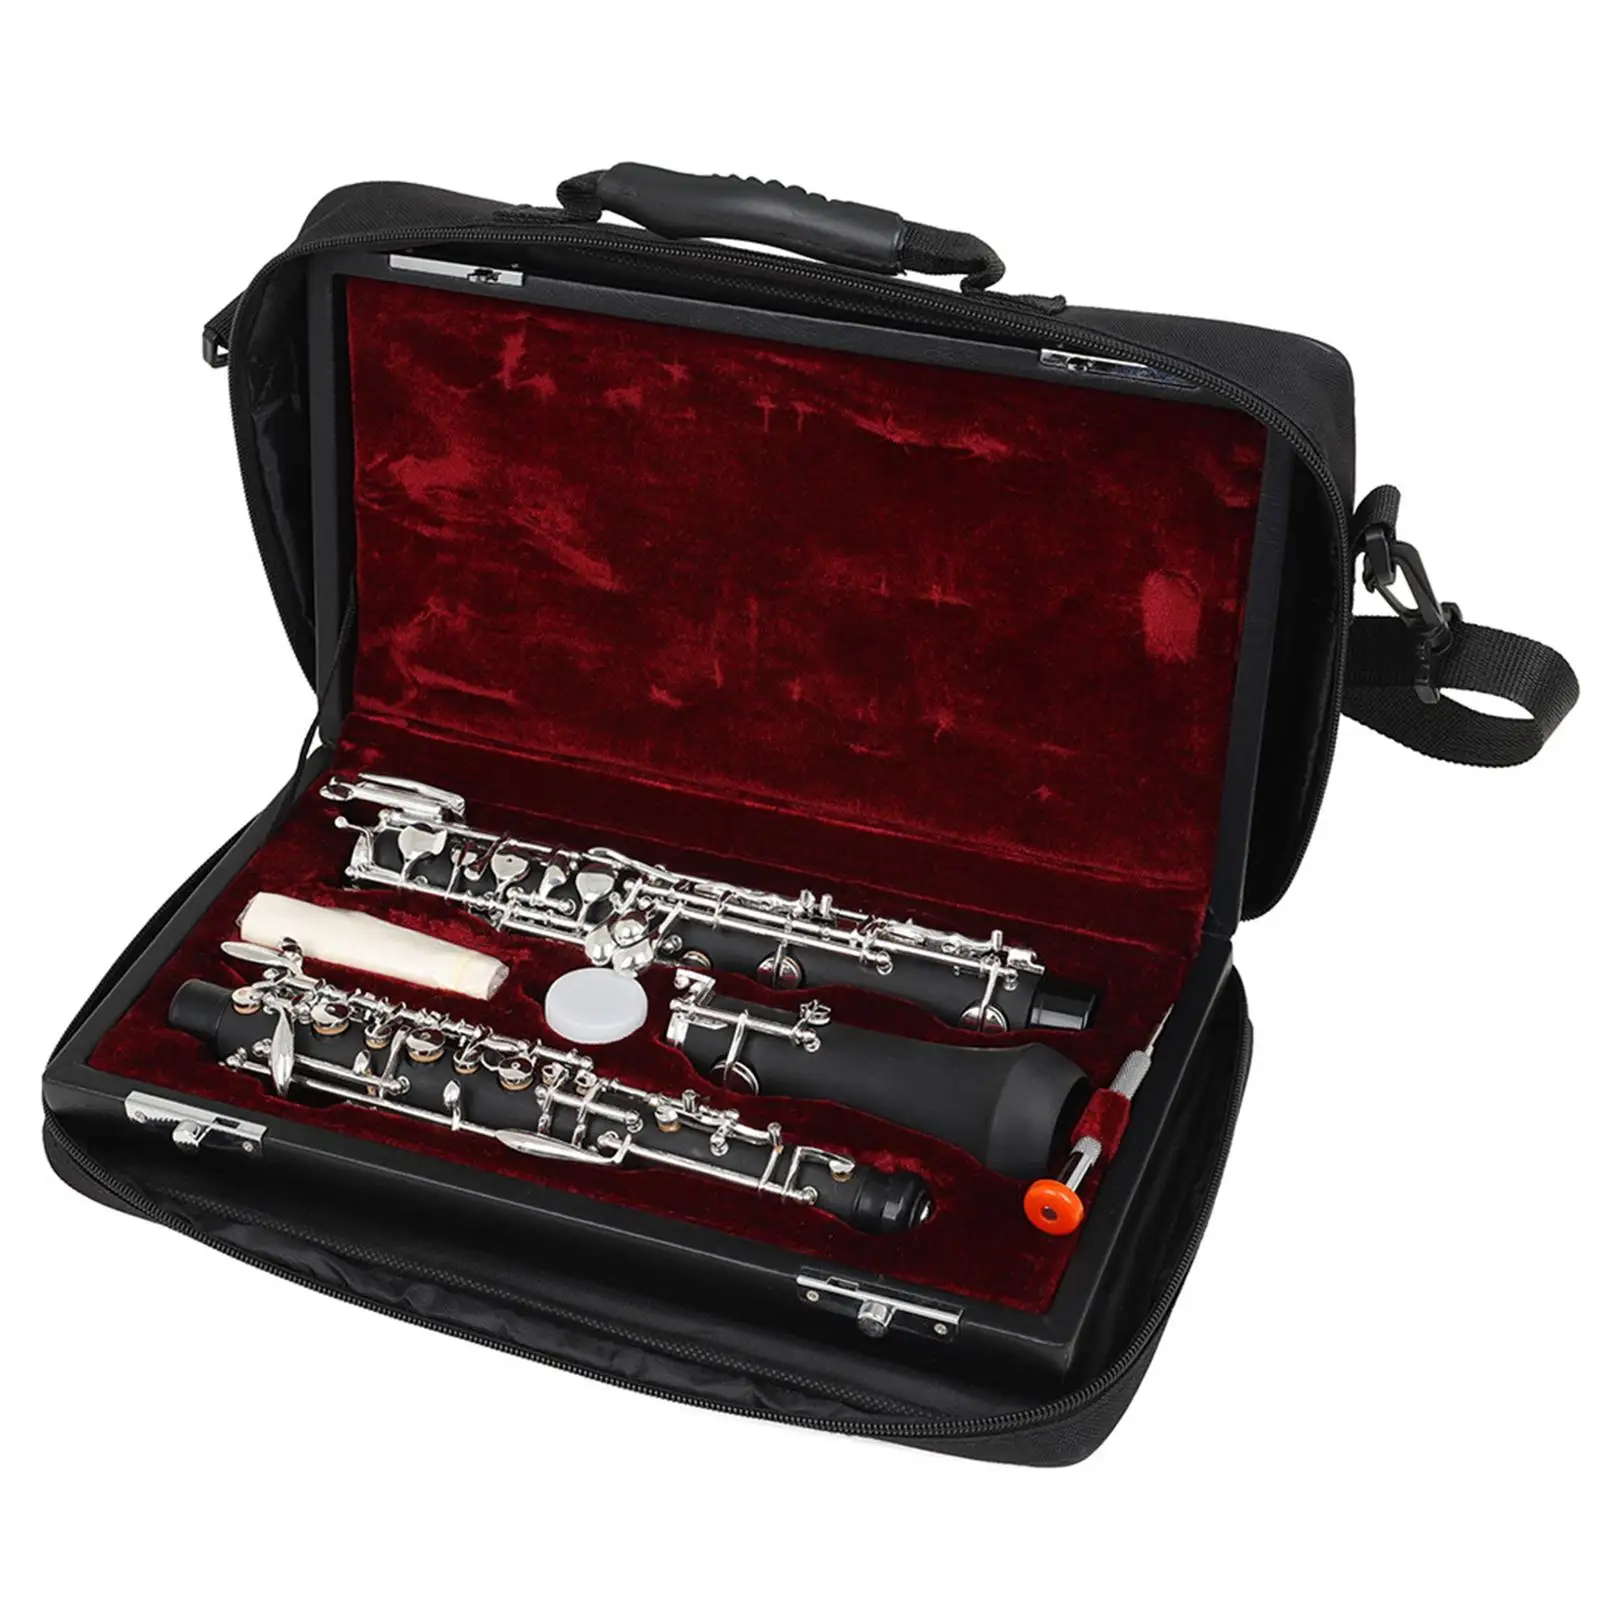 Oboe Cases Lightweight with Adjustable Strap and Padded Carry Handle Shoudler Bag, Wind Instrument Oboe Storage Case